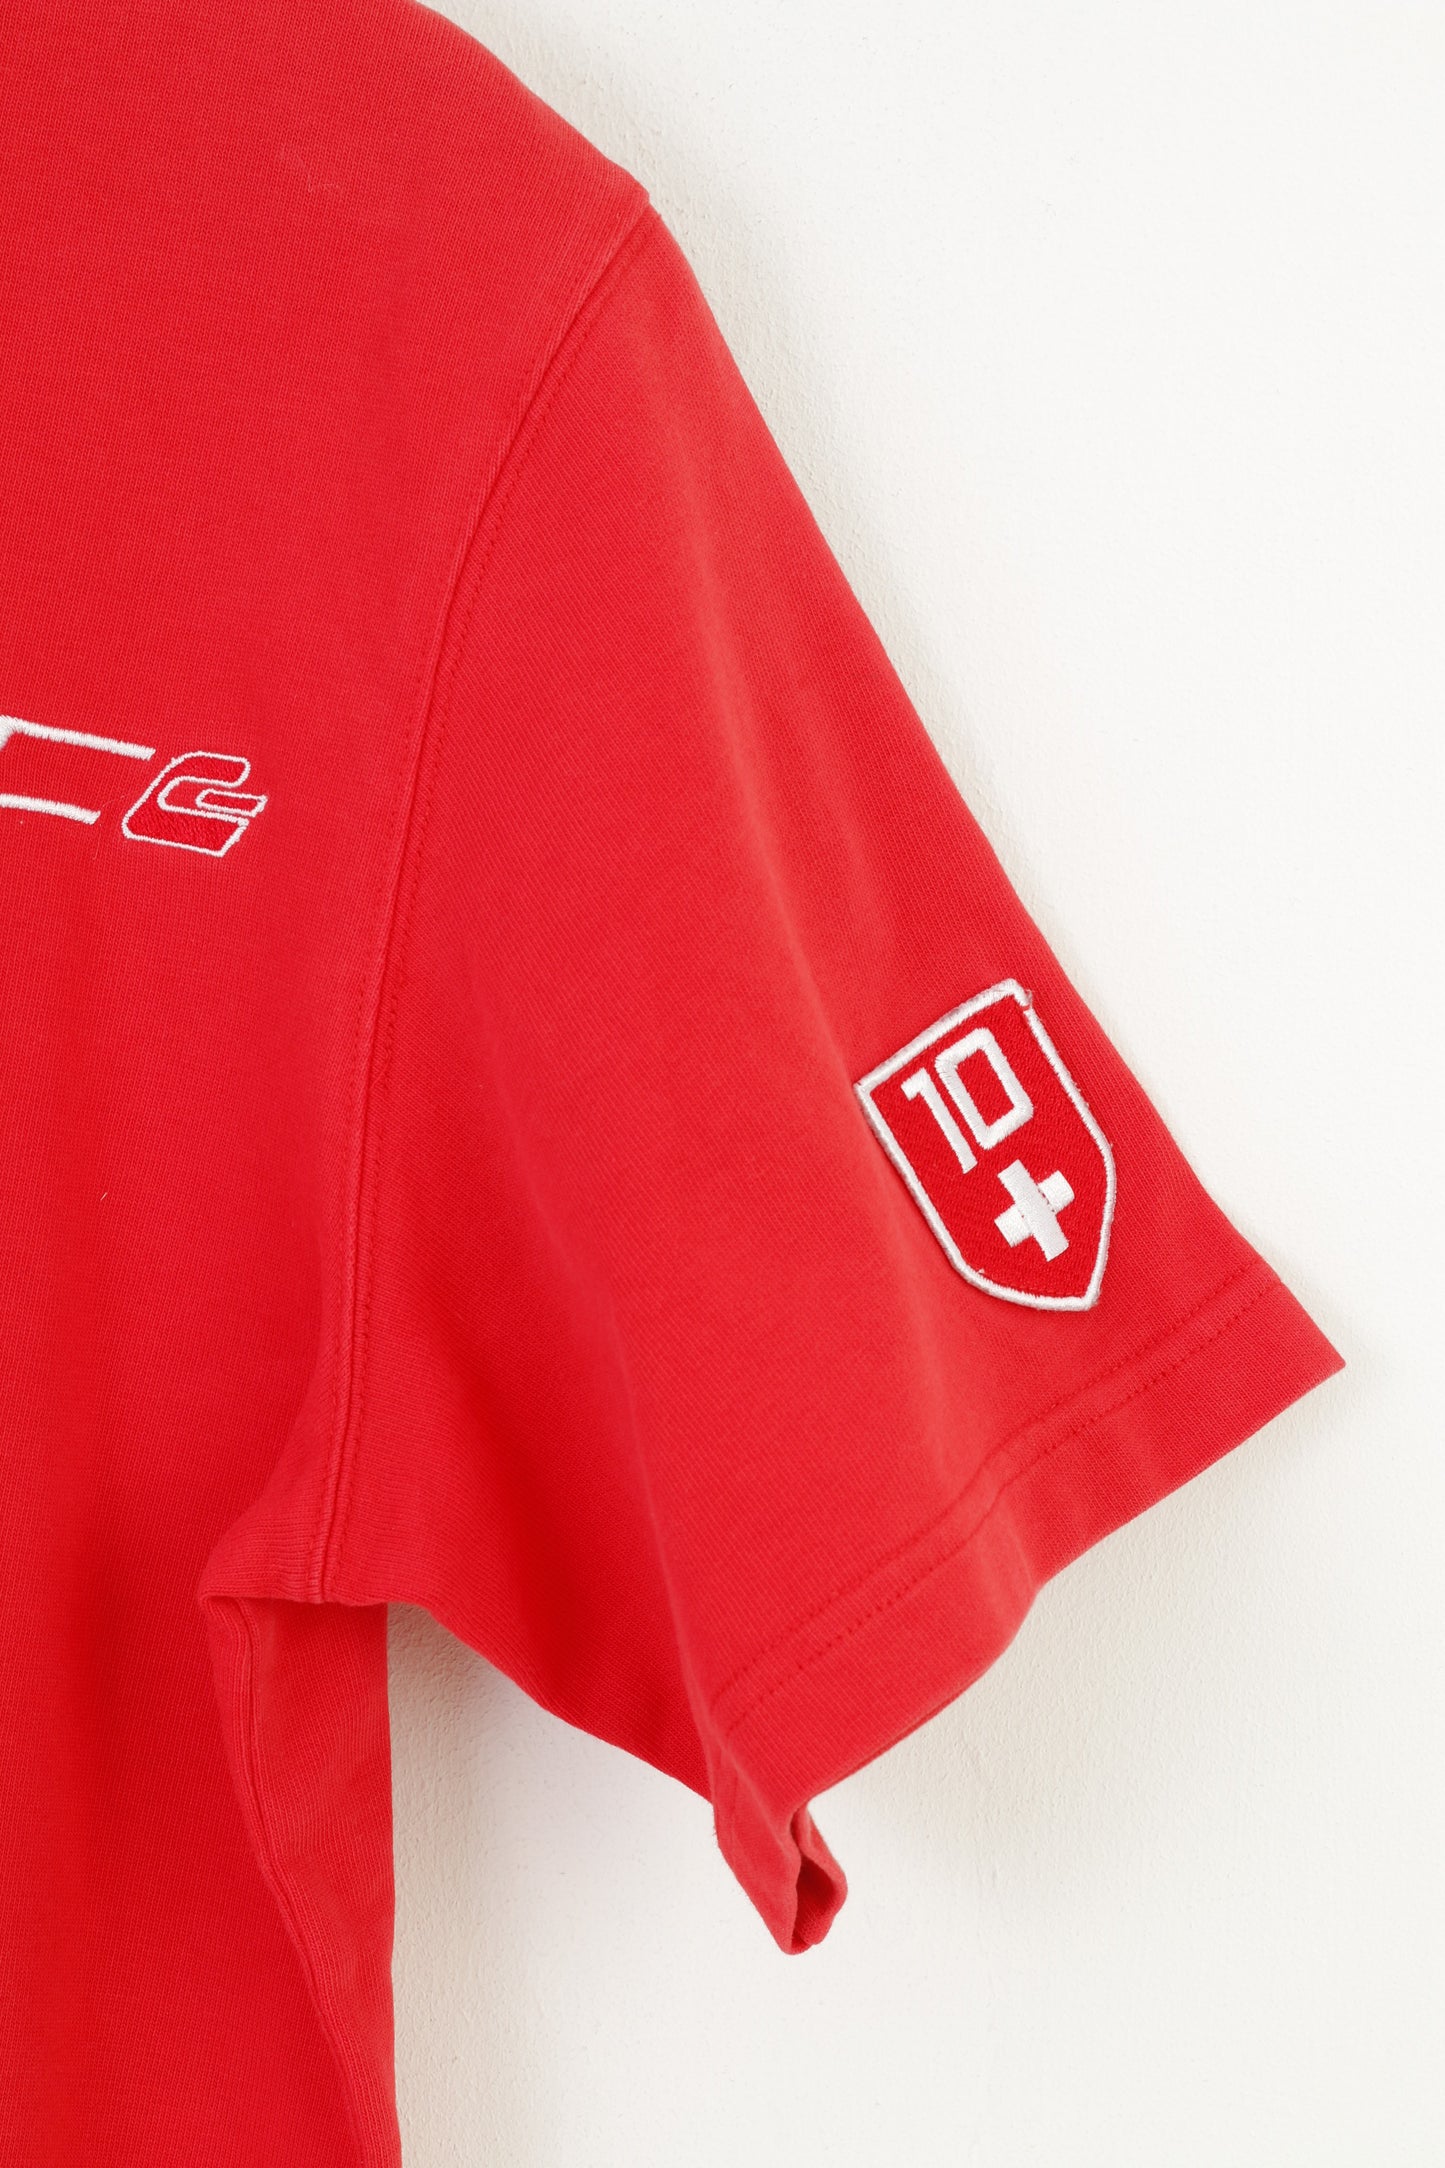 RTC Swiss Handmade Ski Men XL Polo Shirt Red Collar Short Sleeve Buttons Detailed #10 Vintage Top